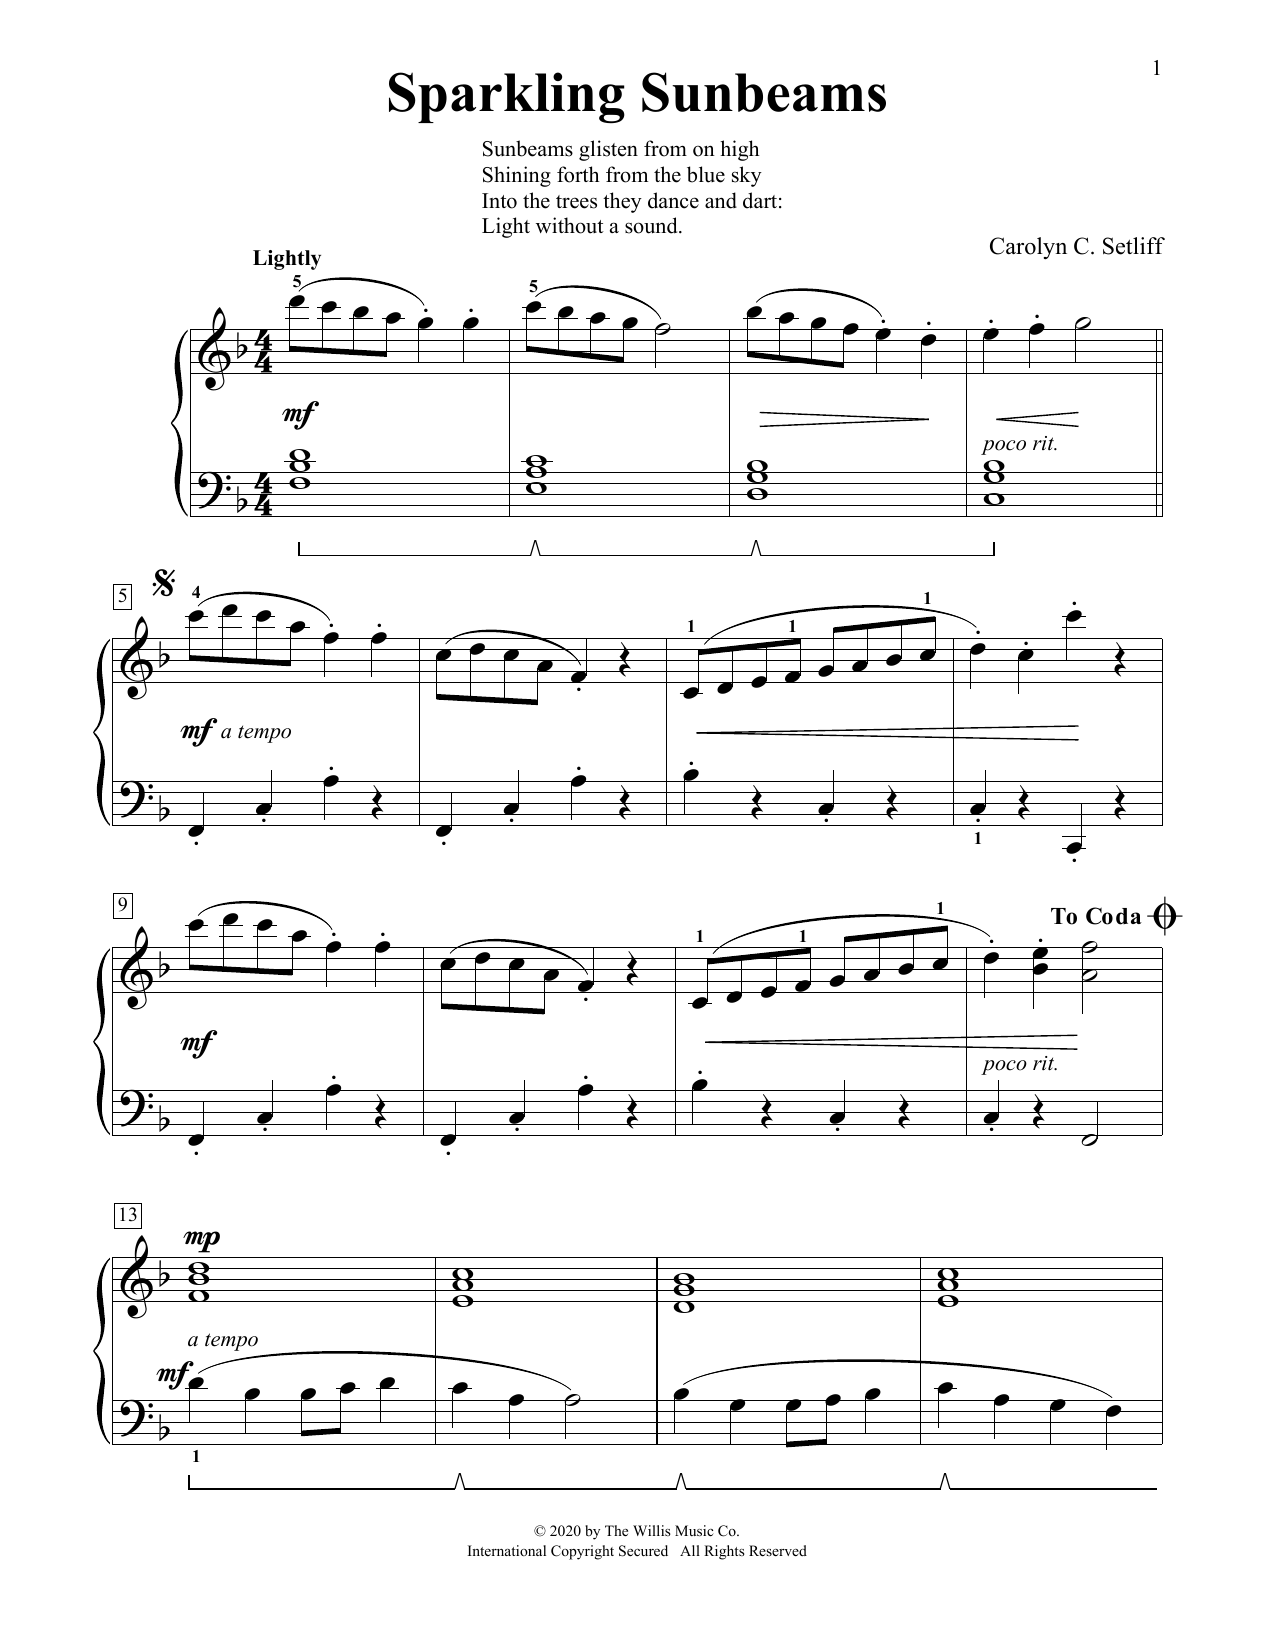 Carolyn C. Setliff Sparkling Sunbeams sheet music notes and chords. Download Printable PDF.